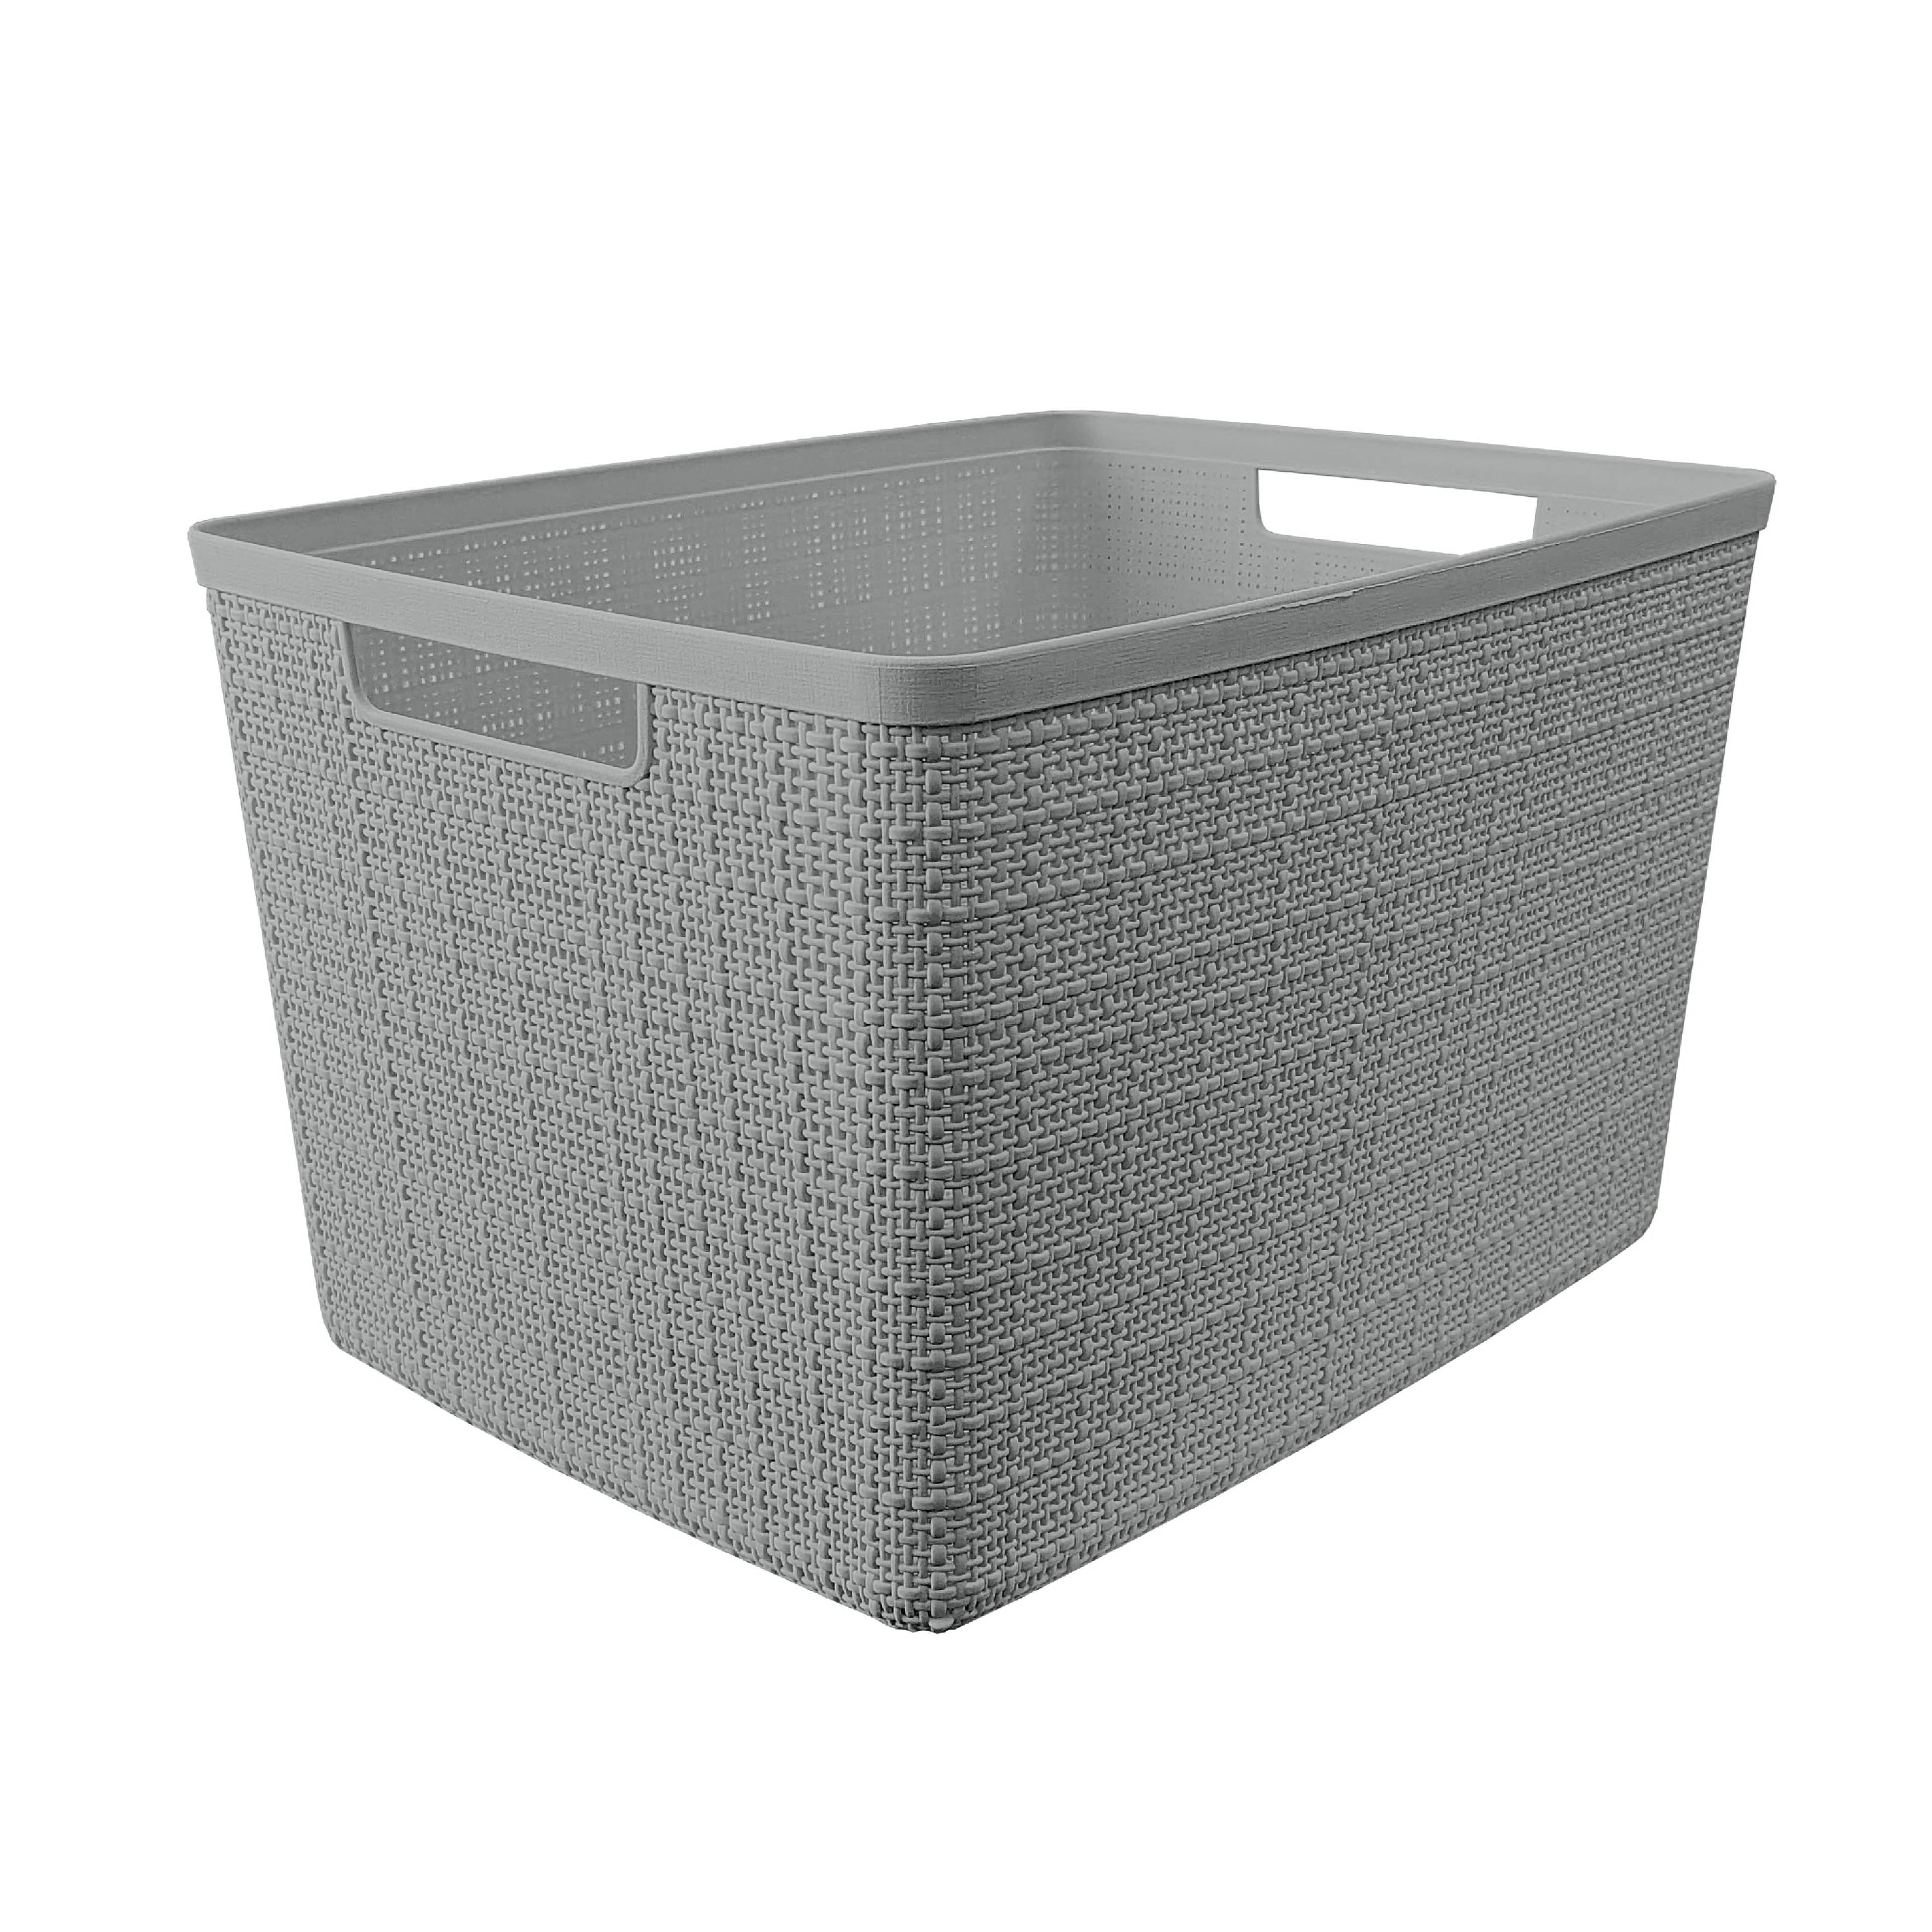 12 Pack: Curver Jute Gray Plastic Storage Basket